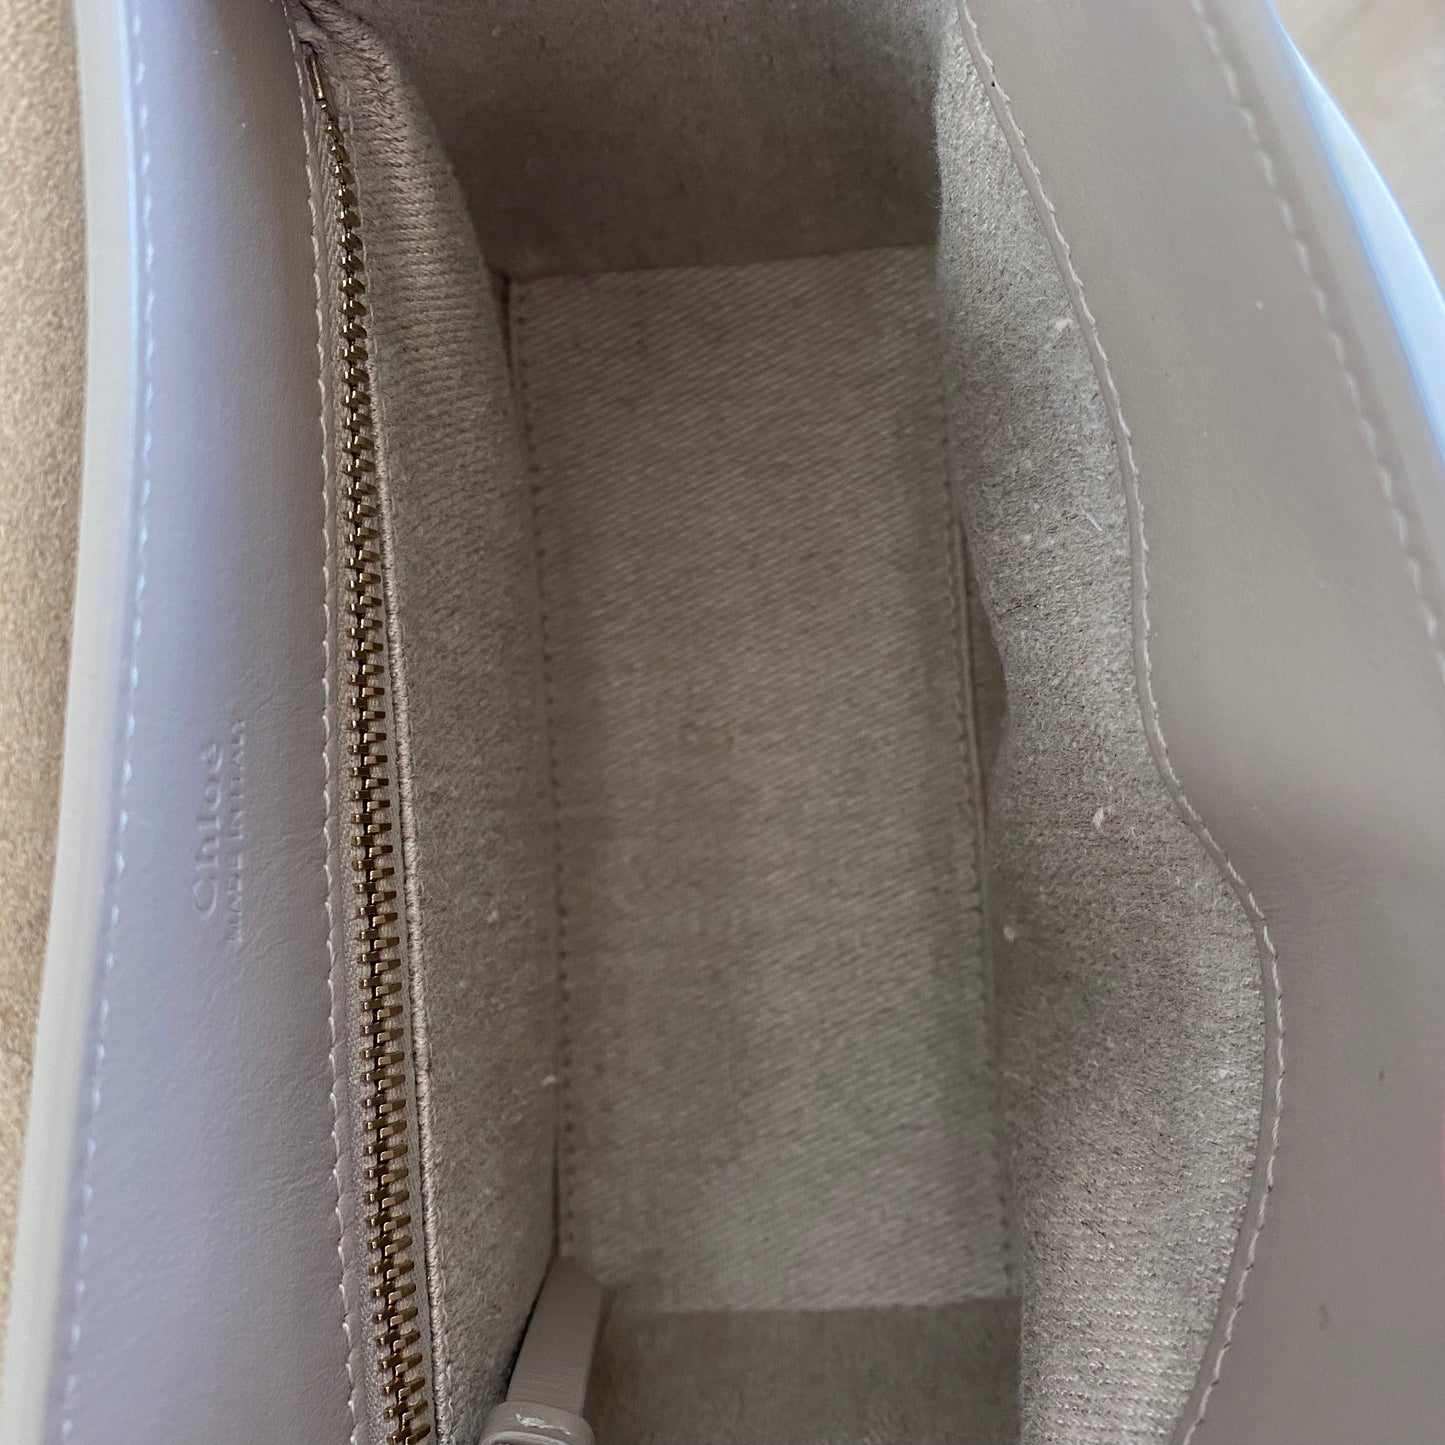 Chloé Mini Tess Day Bag Leather Satchel